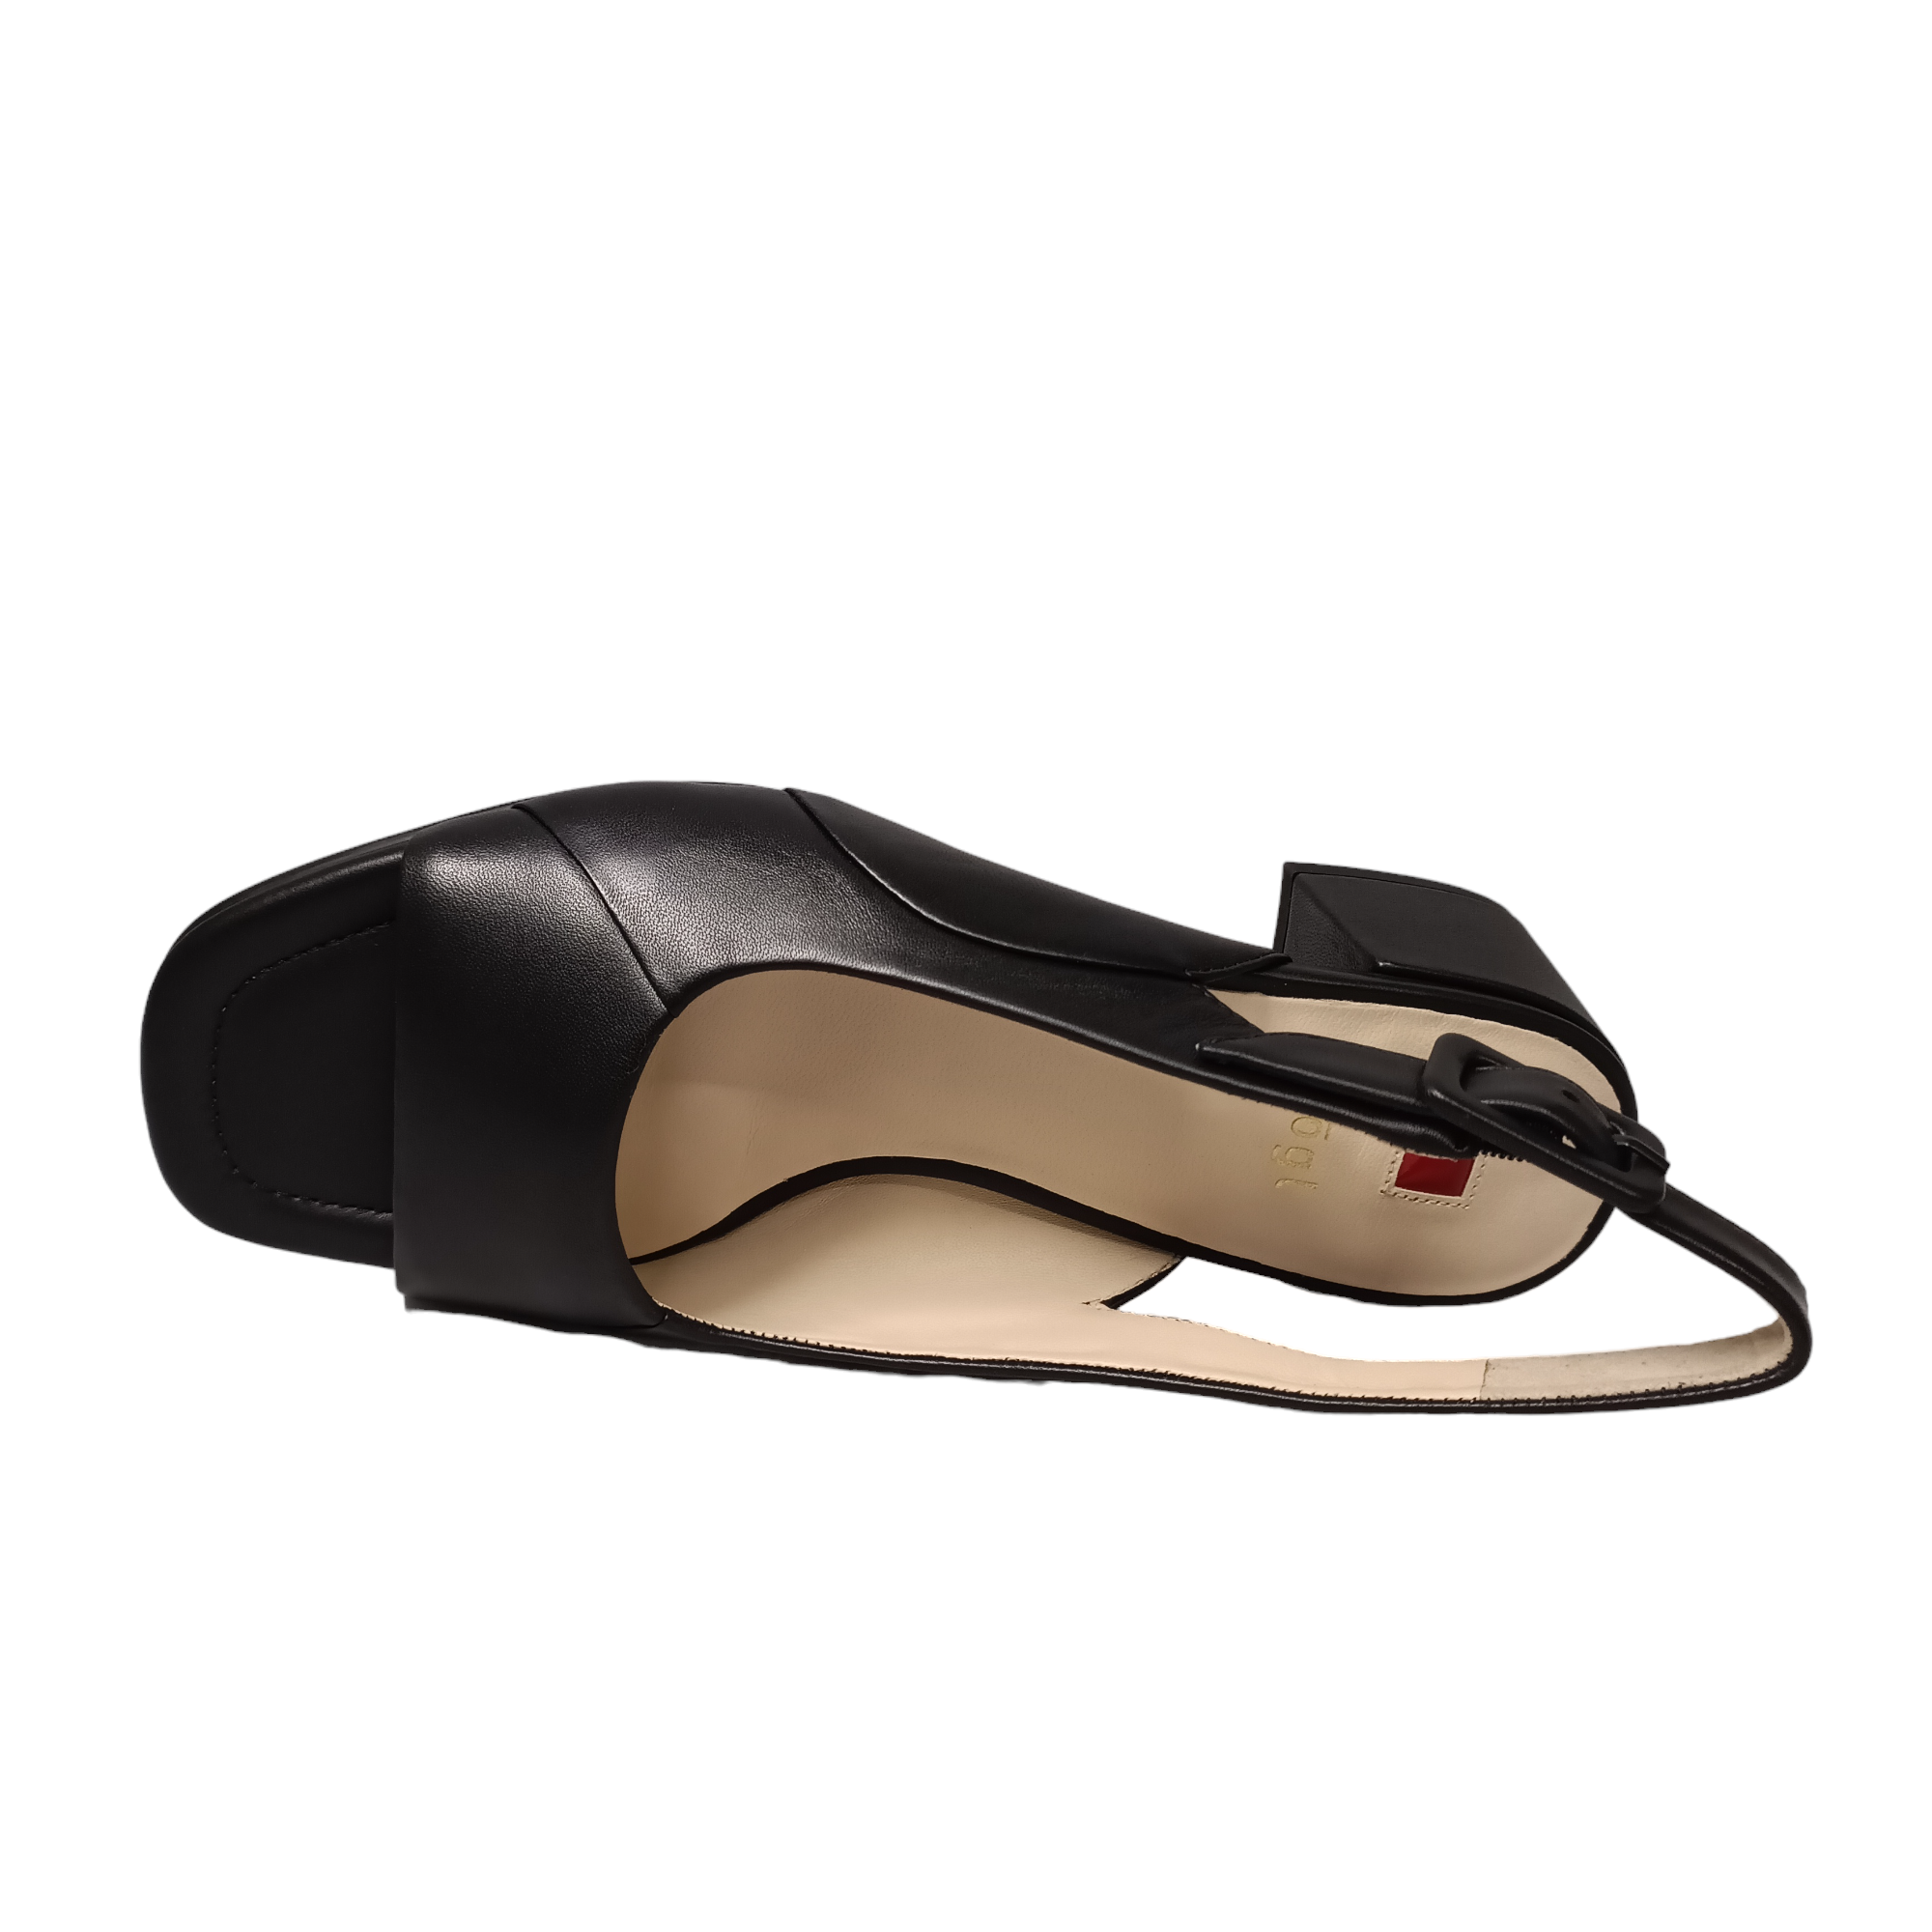 Judy - shoe&amp;me - Hogl - Sandal - Heels, Summer, Womens